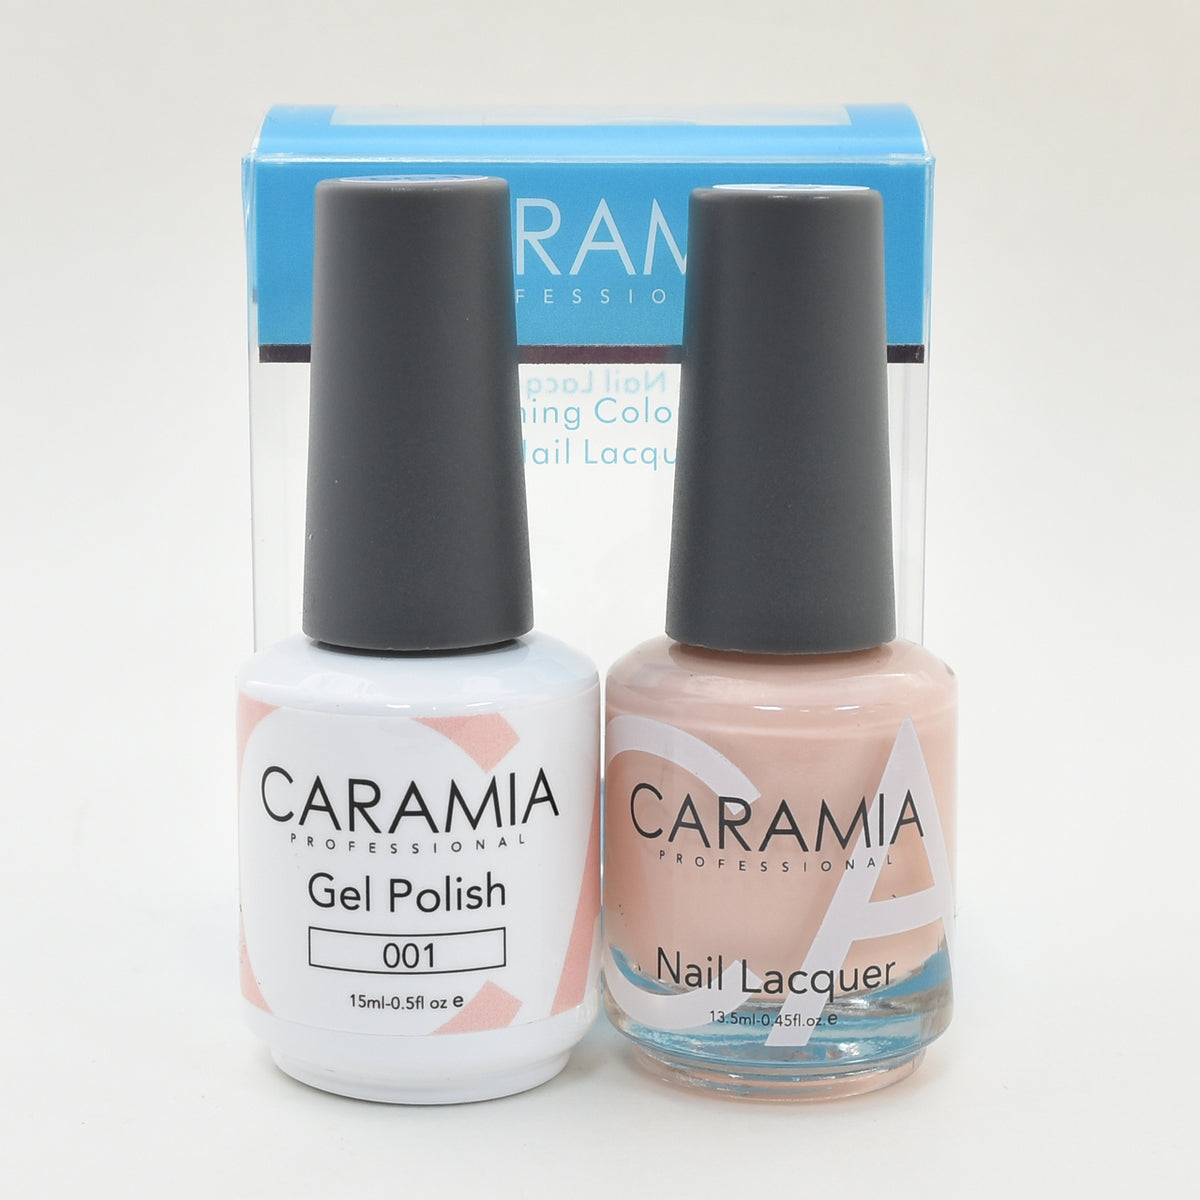 Caramia nails polish, nails polish, gel of nails, manicure, Gelish, russian manicure, nails, pink glam box